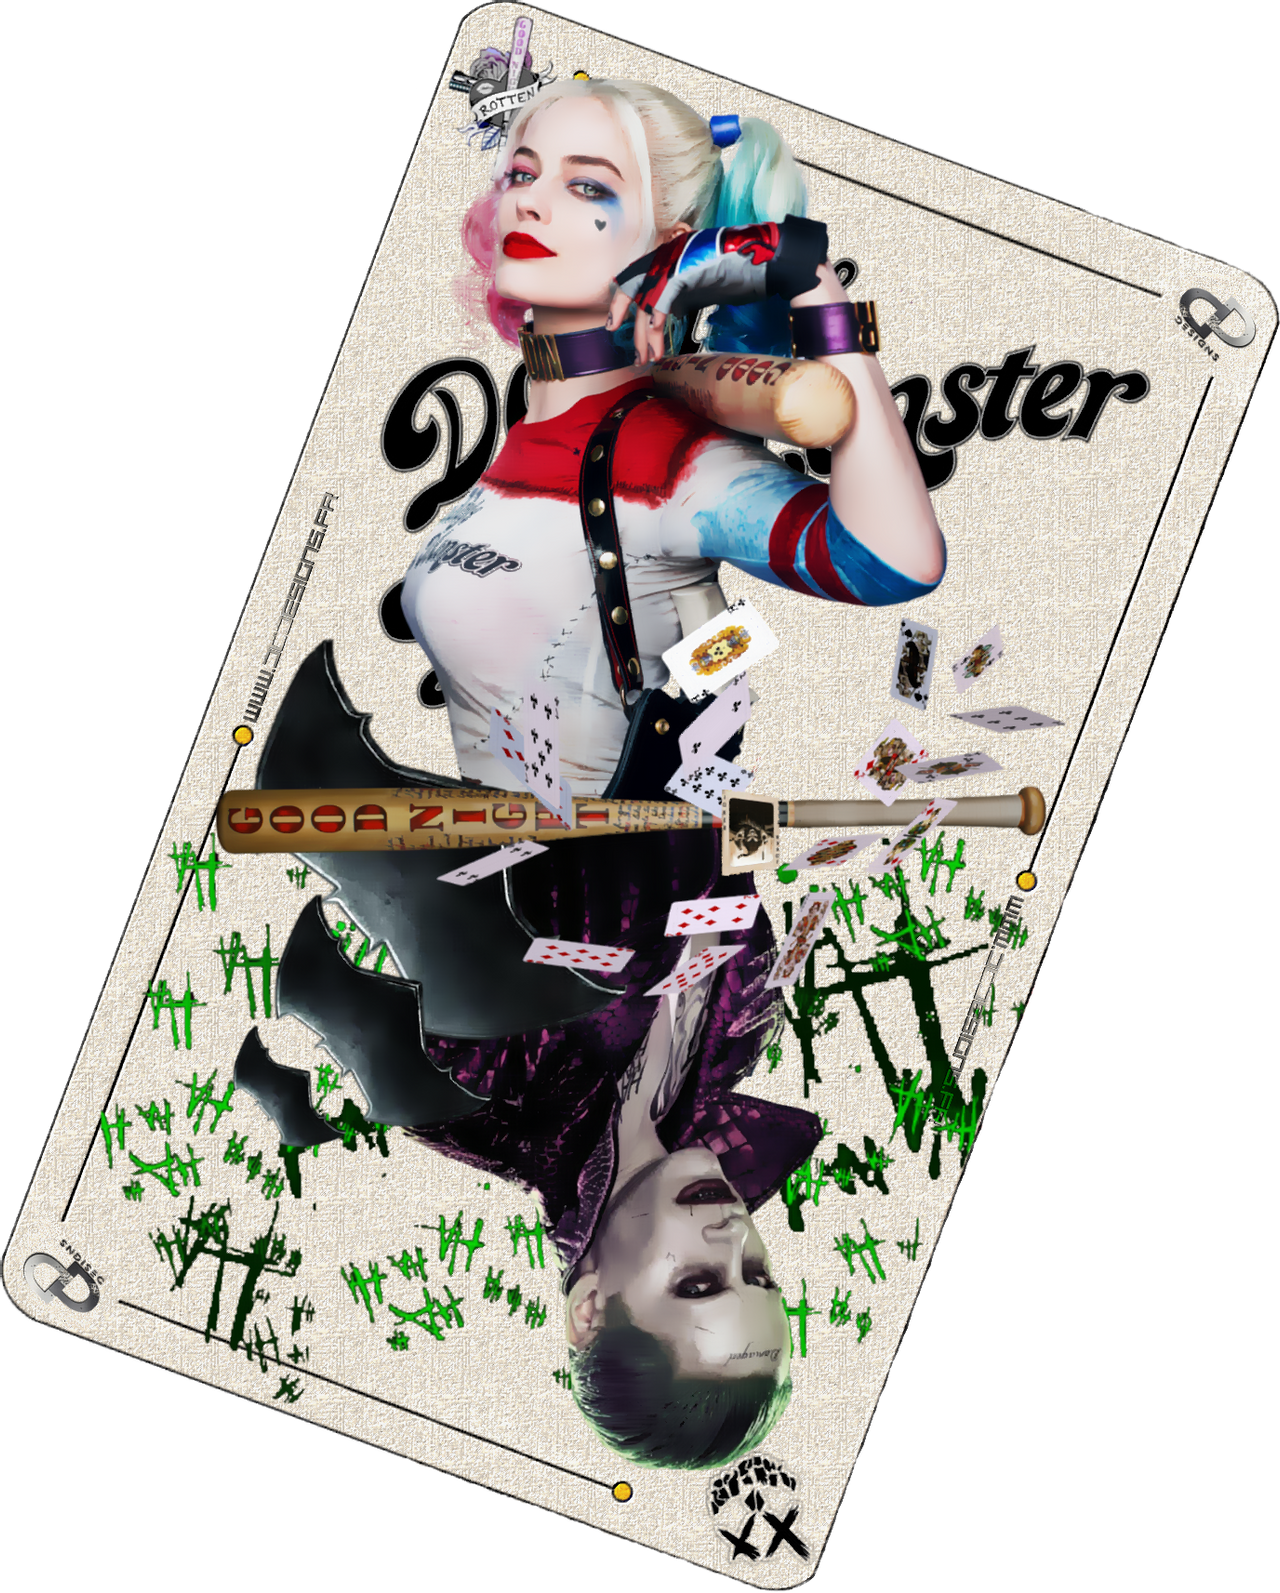 Joker kartı PNG Resmi